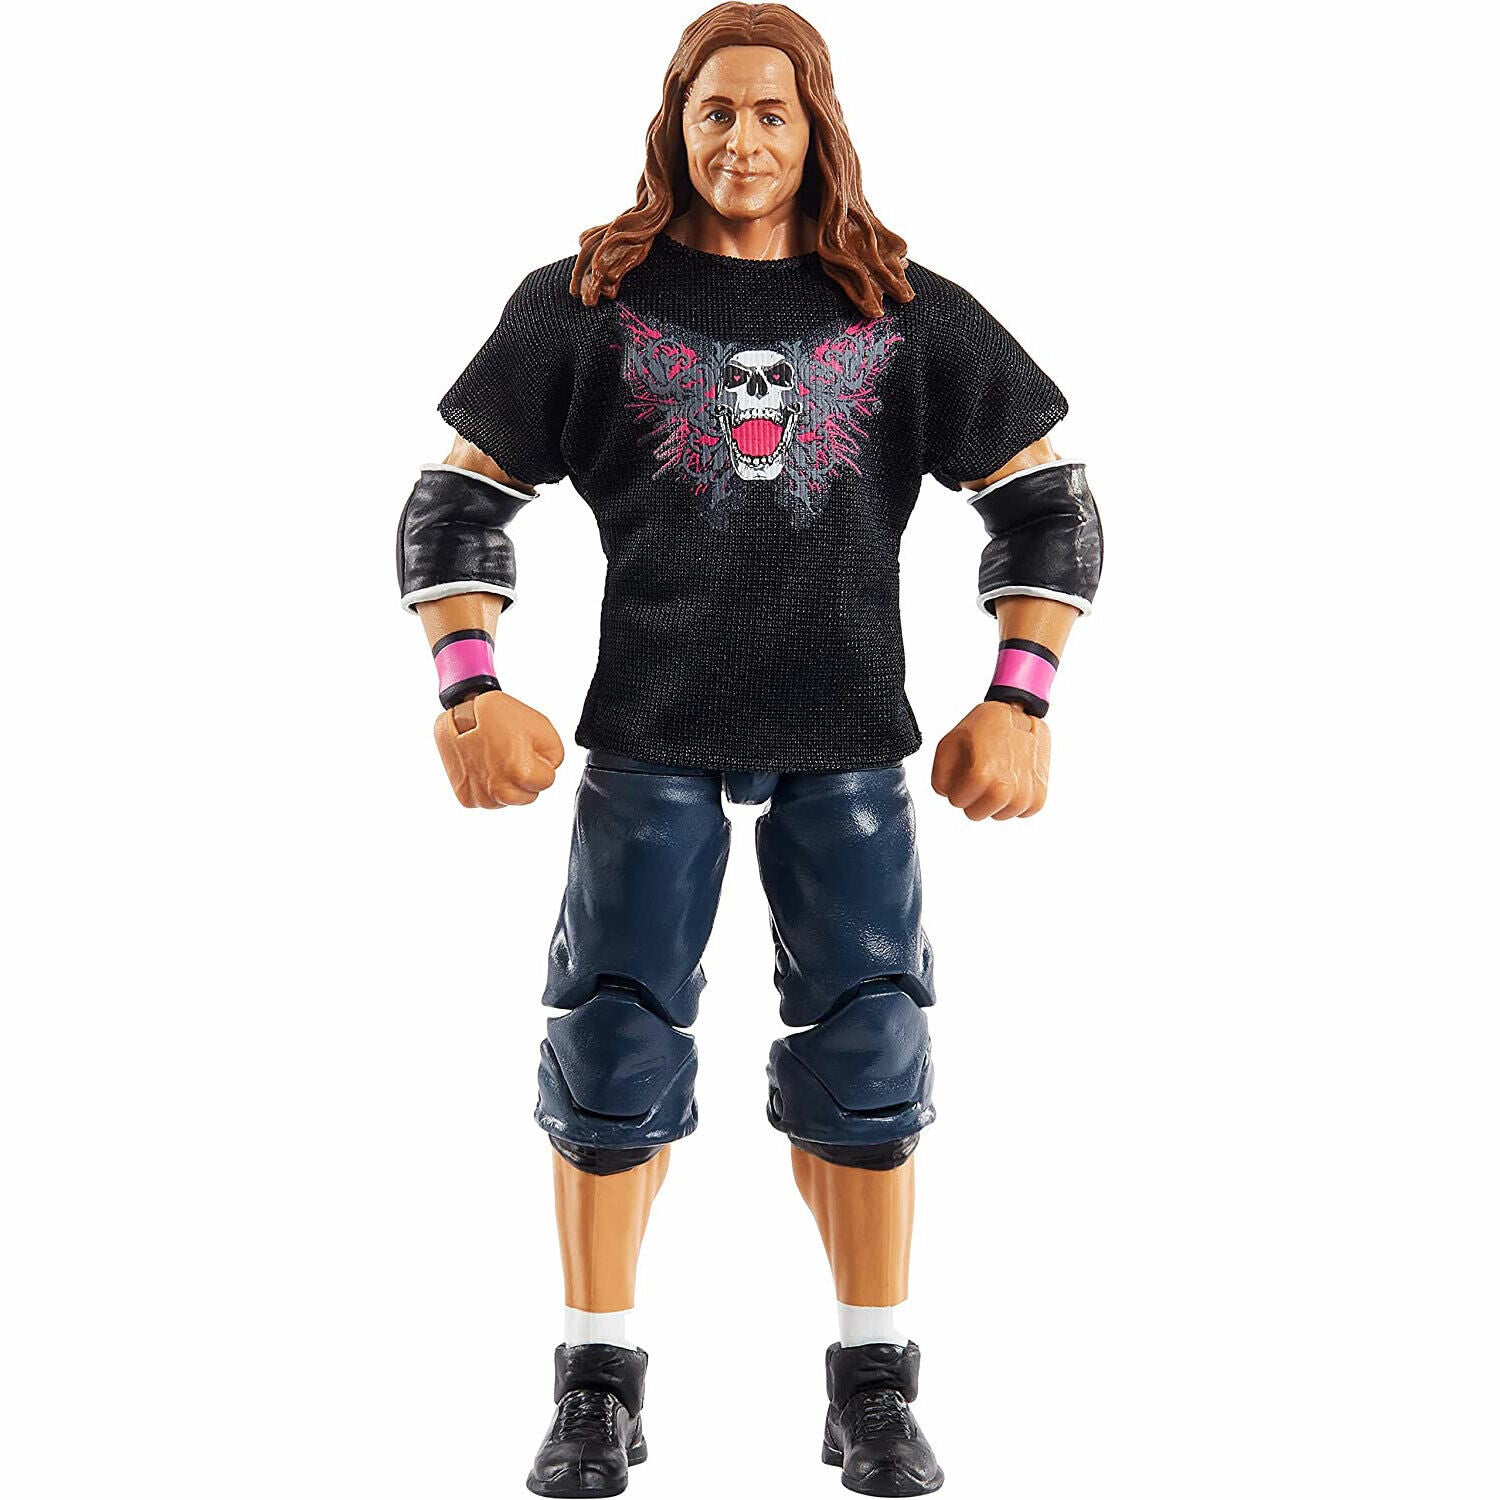 New WWE WrestleMania Elite Bret 'Hit Man' Hart Action Figure